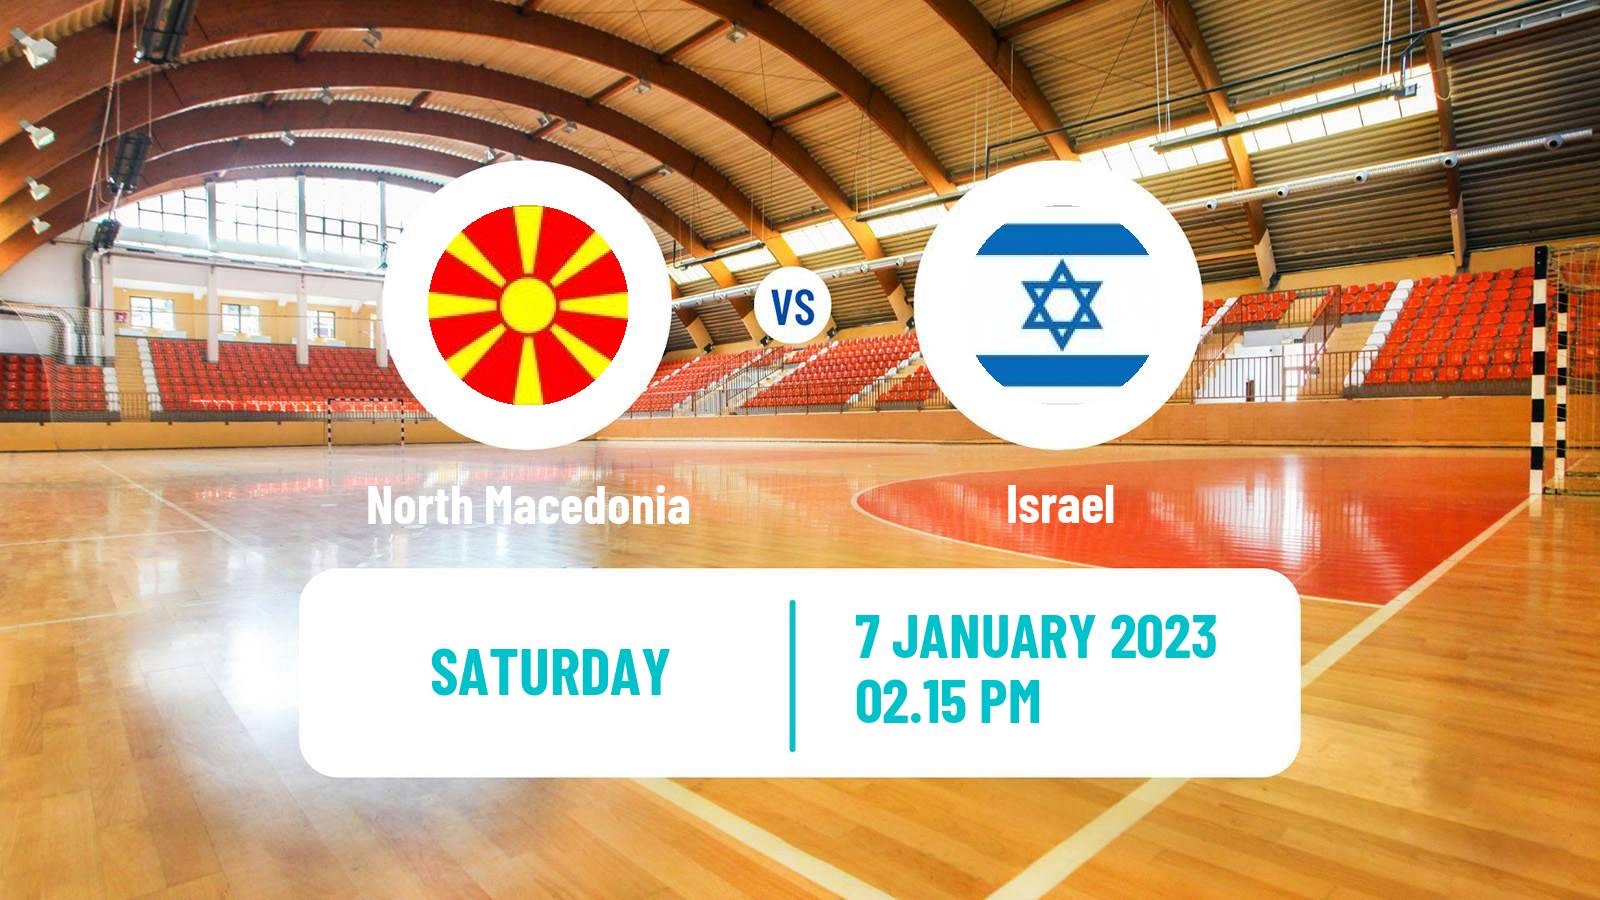 Handball Friendly International Handball North Macedonia - Israel